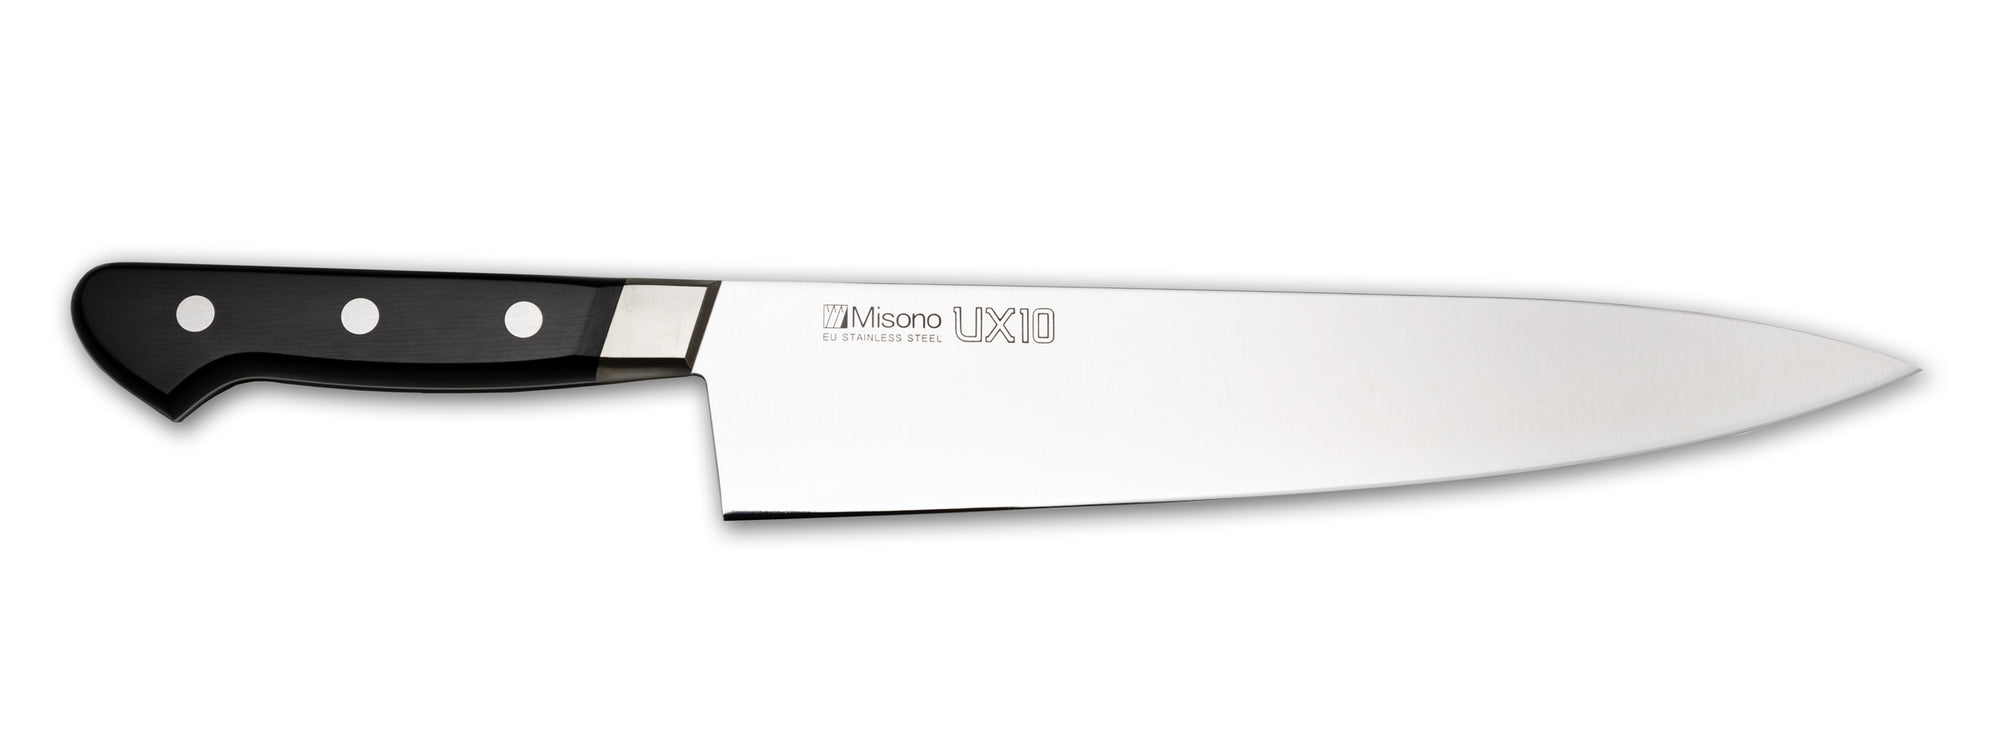 Misono UX10 Chef Knife Gyutou Canada 270mm